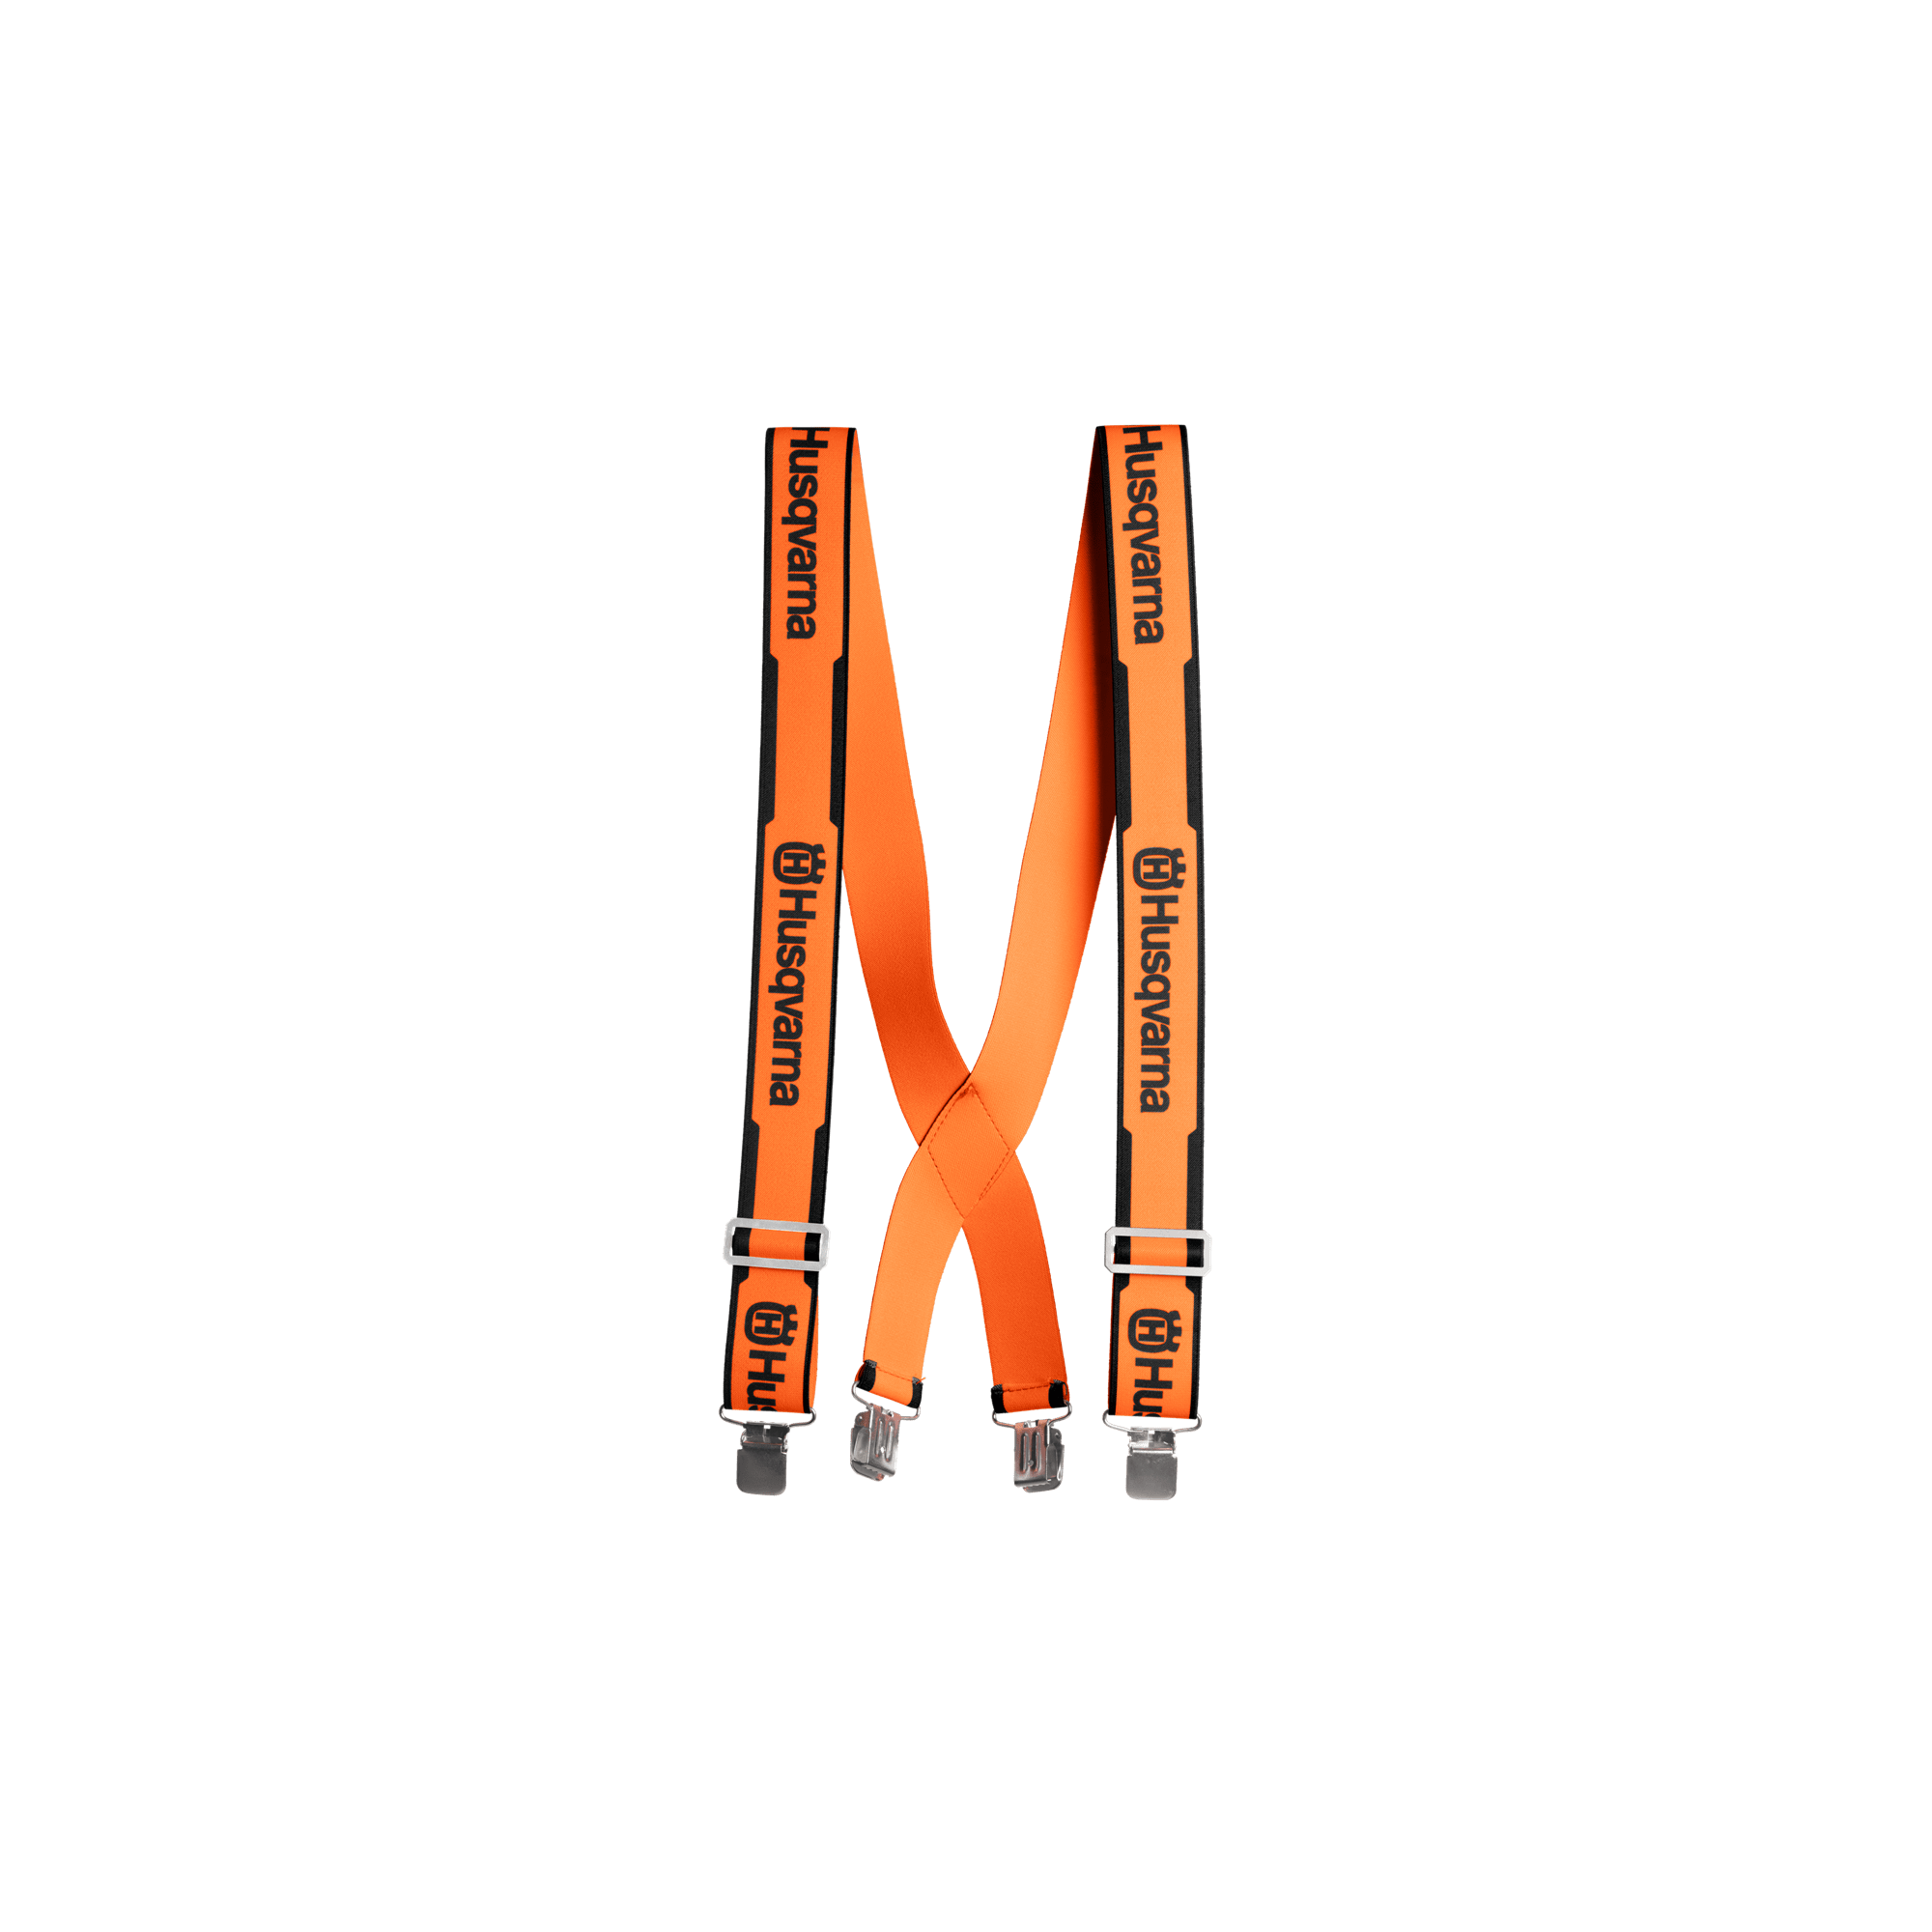 Image for Husqvarna Suspenders - Metal Clip-on                                                                                             from HusqvarnaB2C